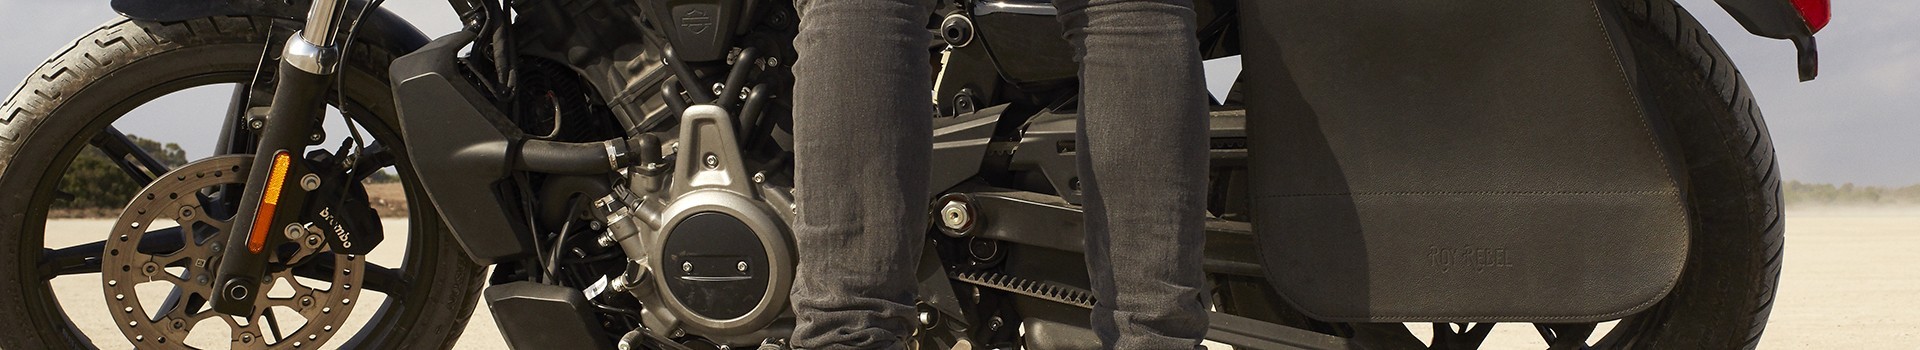 Motorcycle bag supports for Harley Davidson